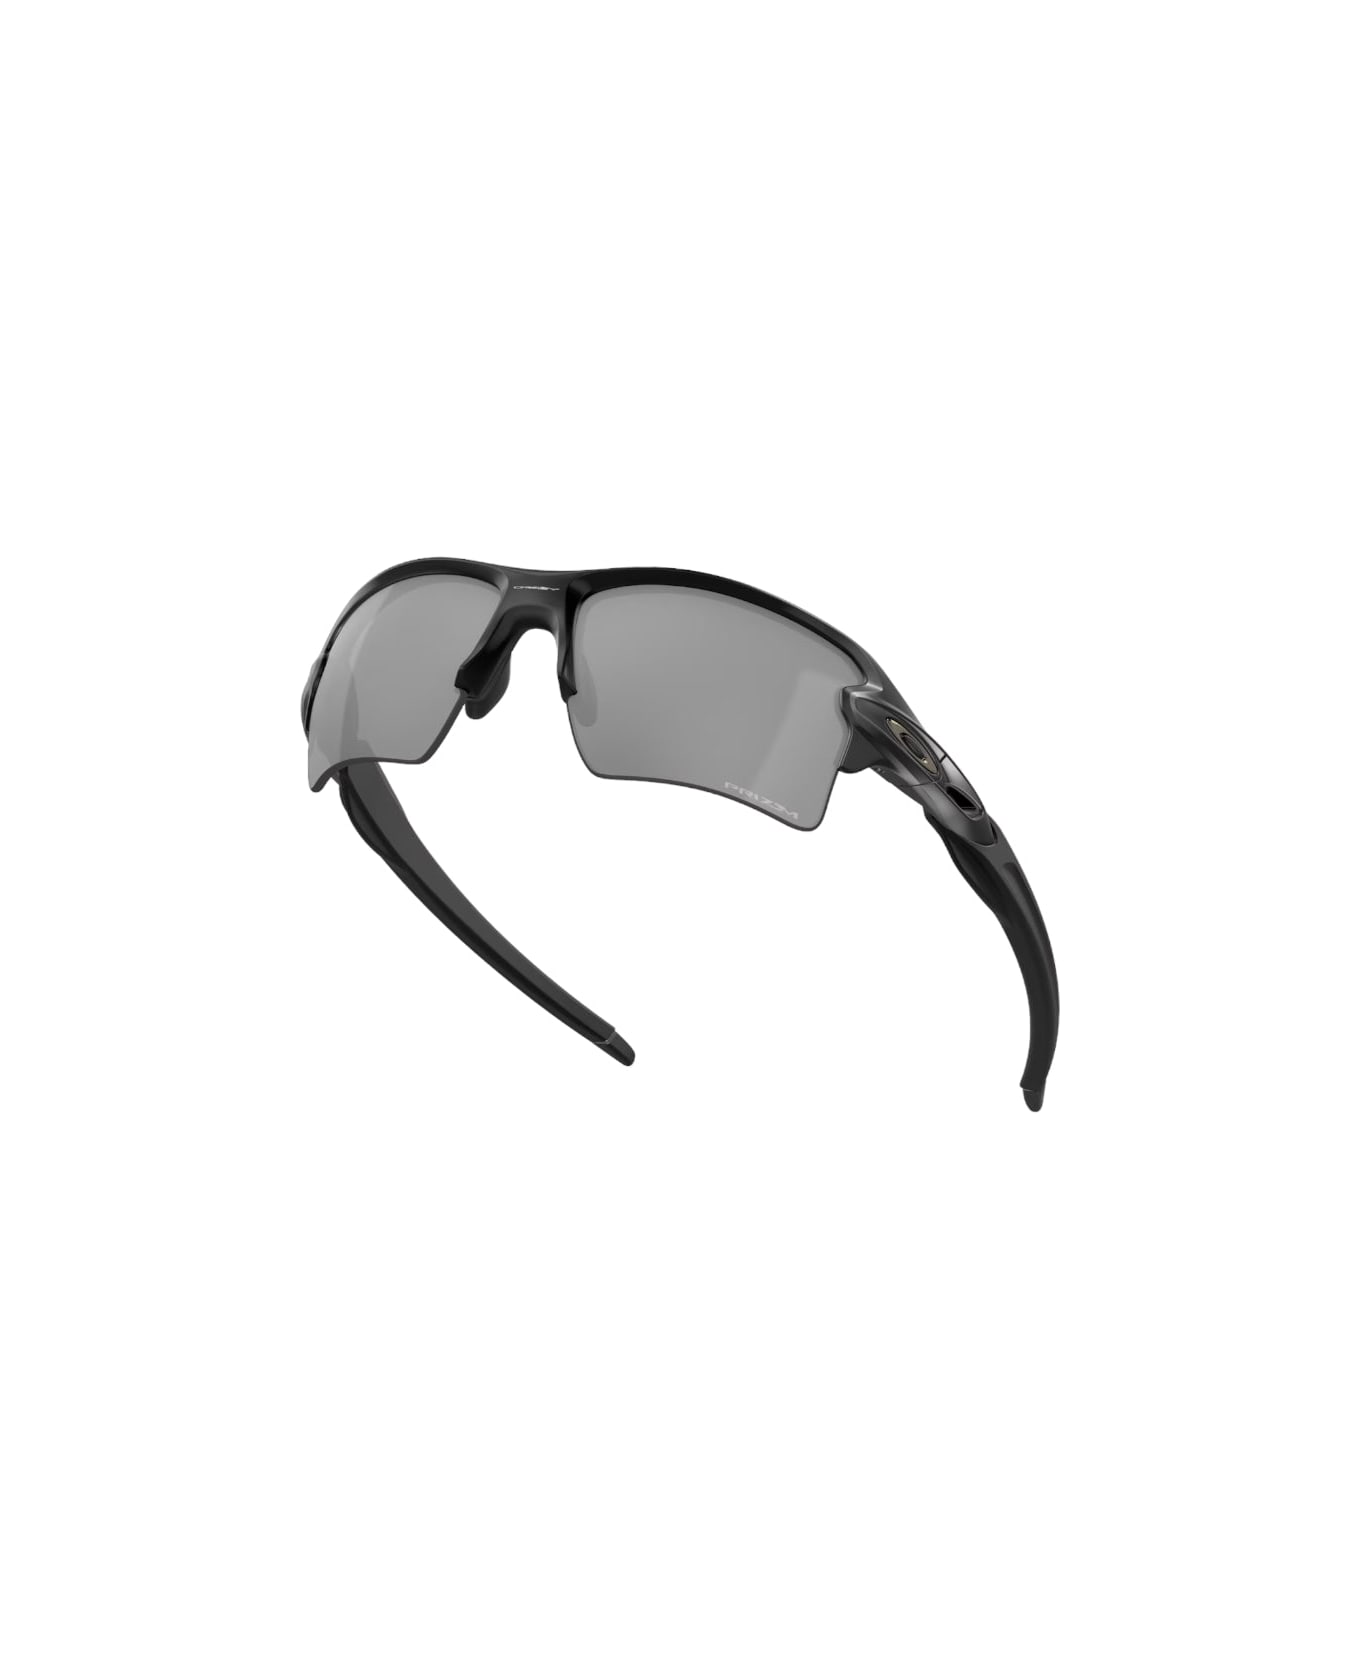 Oakley Flak 2.0 Xl - 9188 Sunglasses